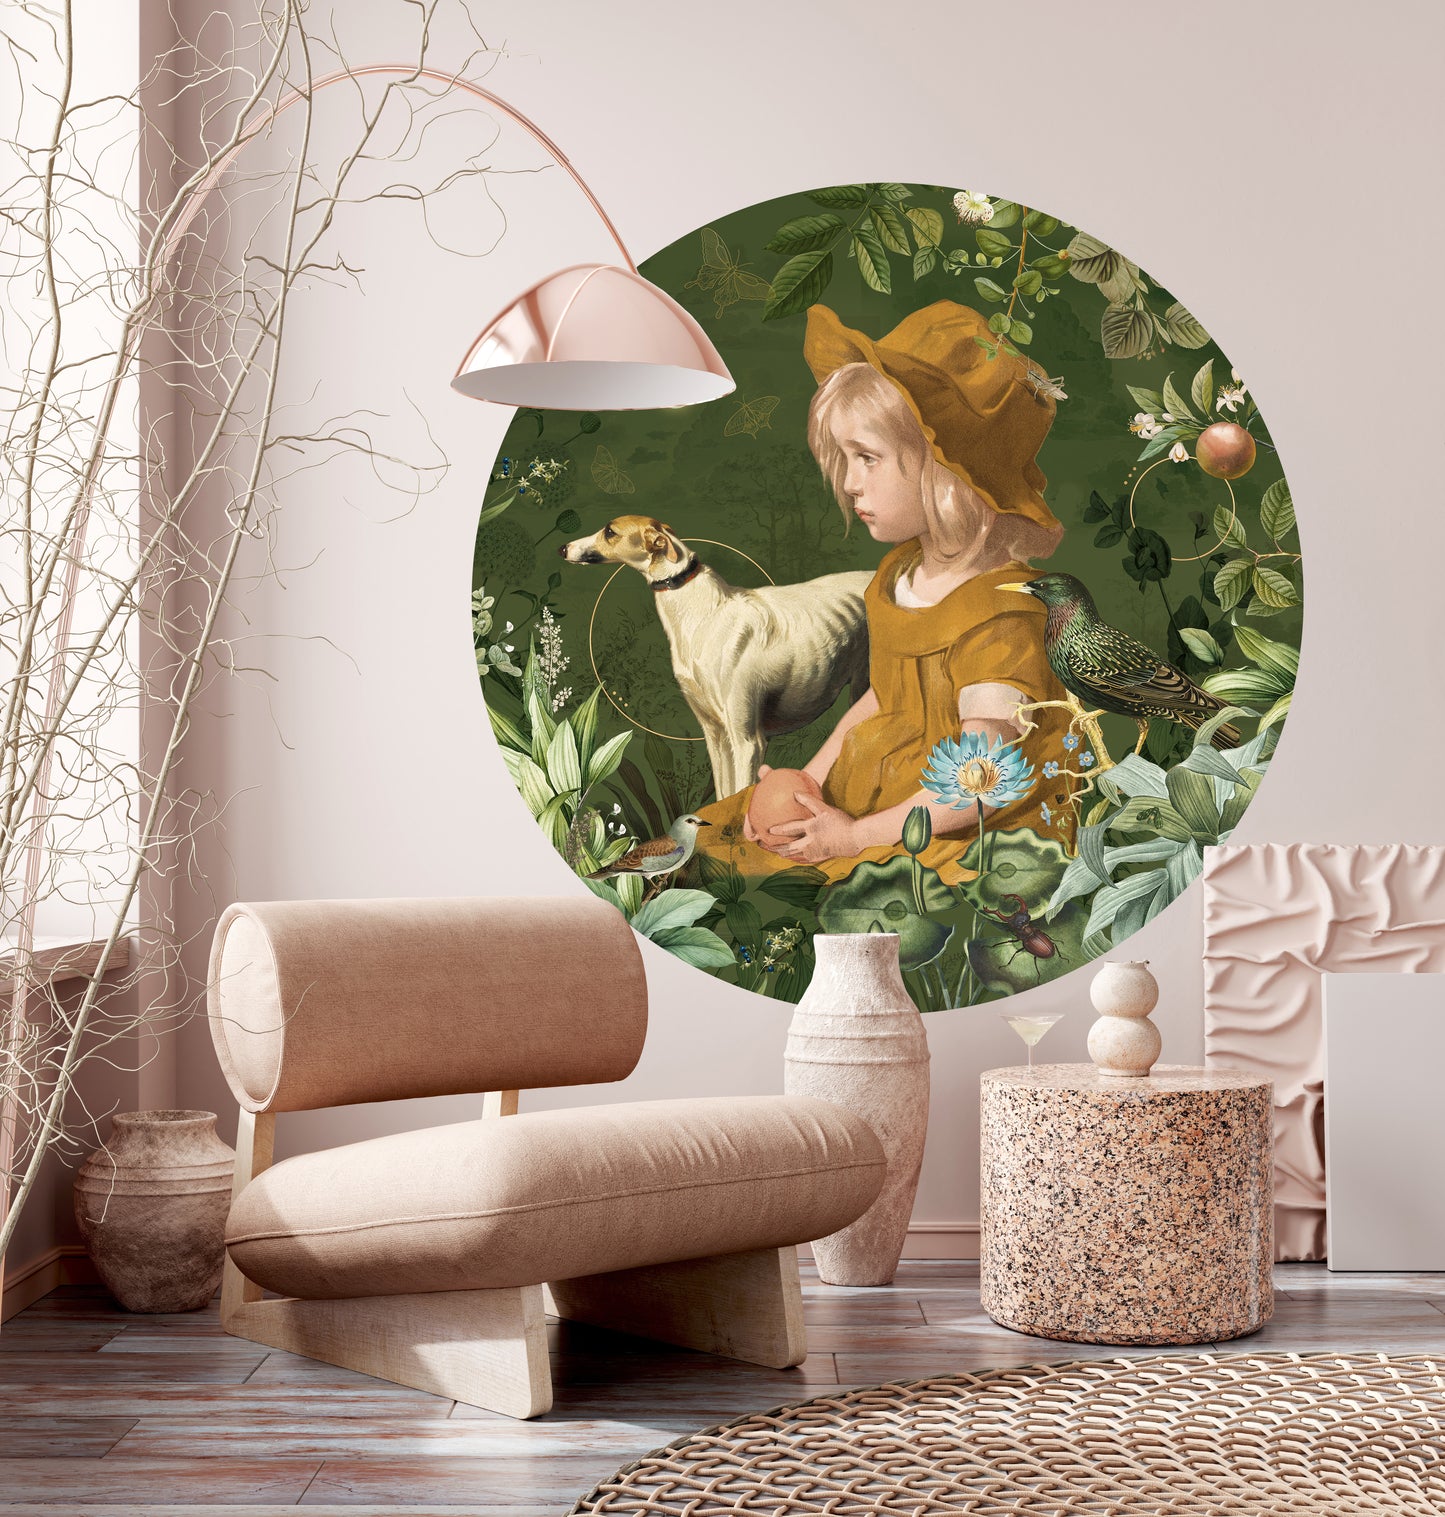 Modern interior with botanical vintage girl wallpaper